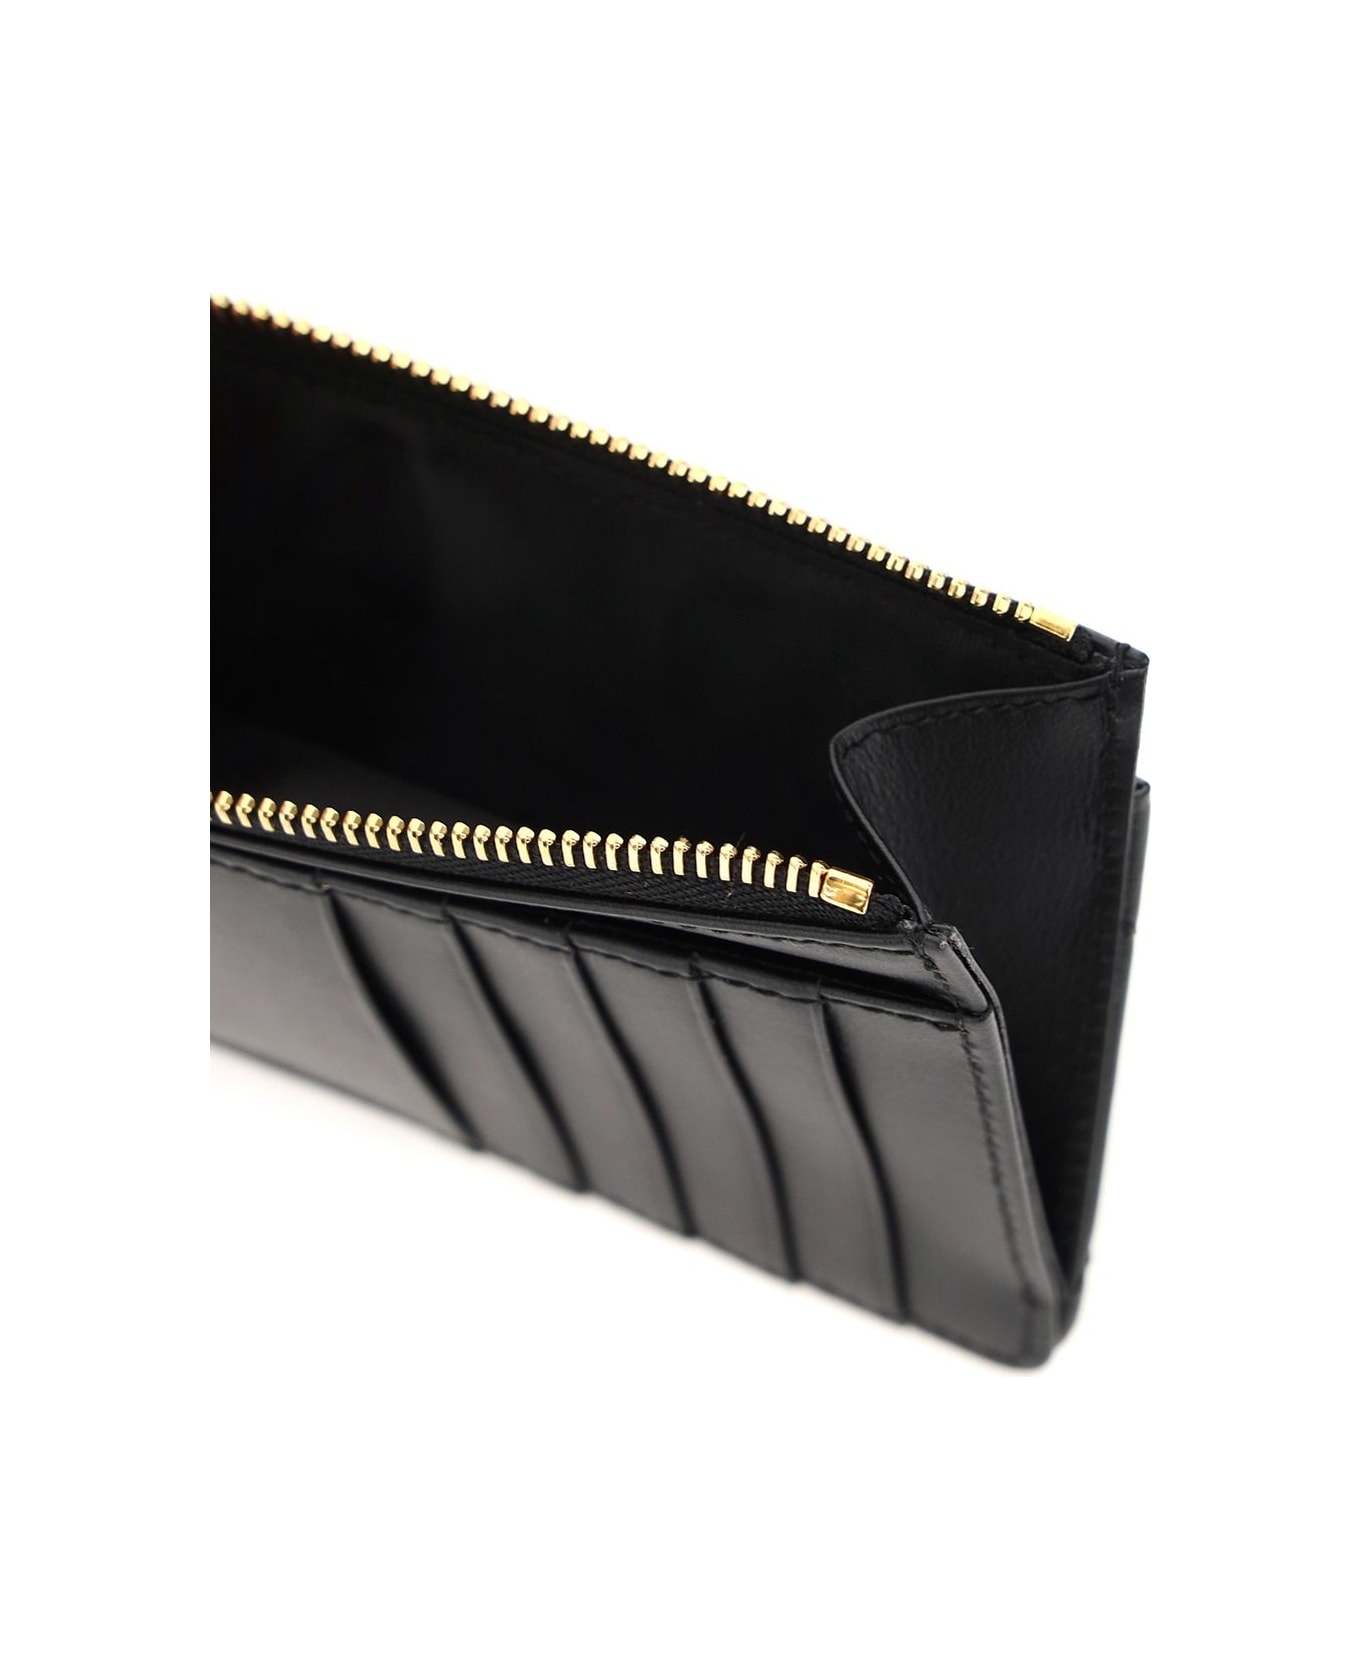 Dolce & Gabbana Devotion Cardholder - Black